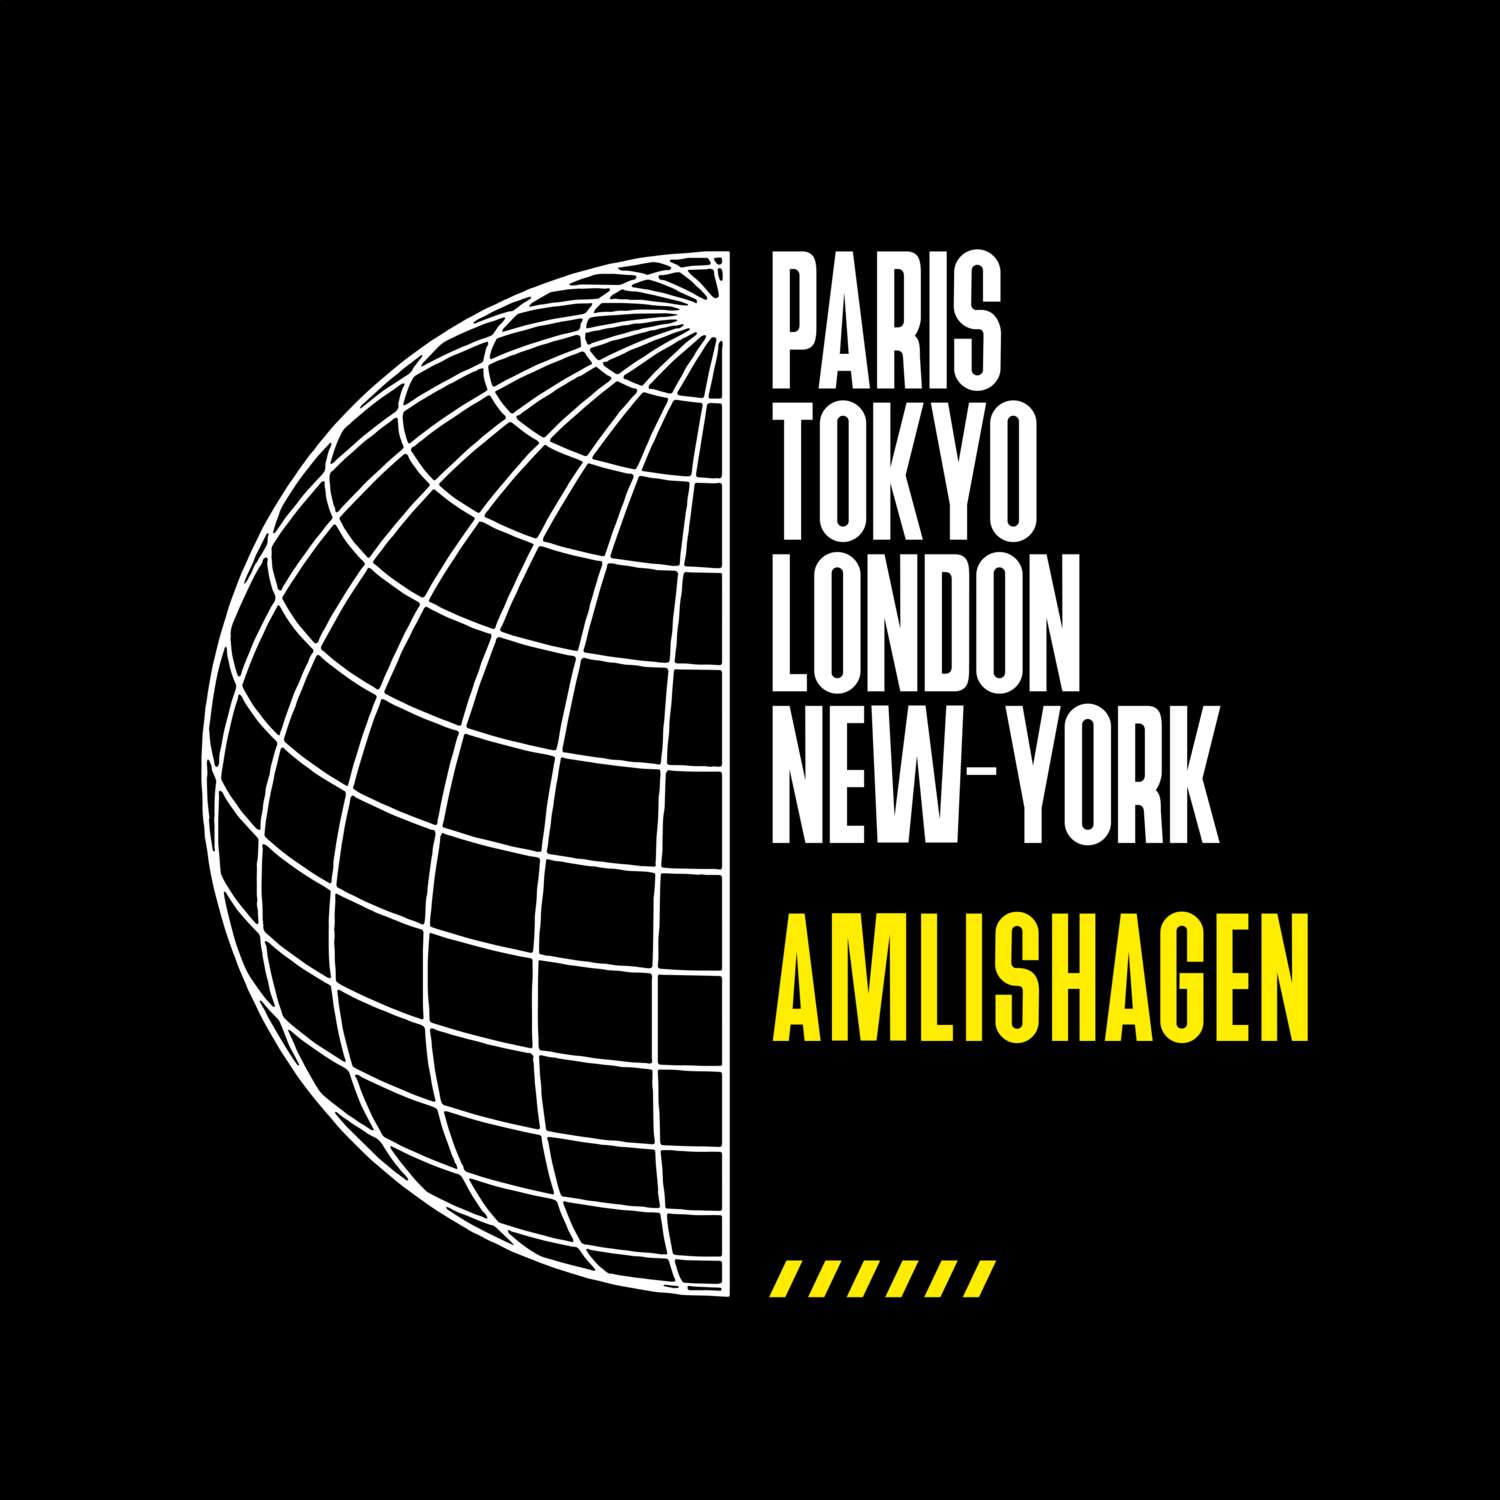 Amlishagen T-Shirt »Paris Tokyo London«